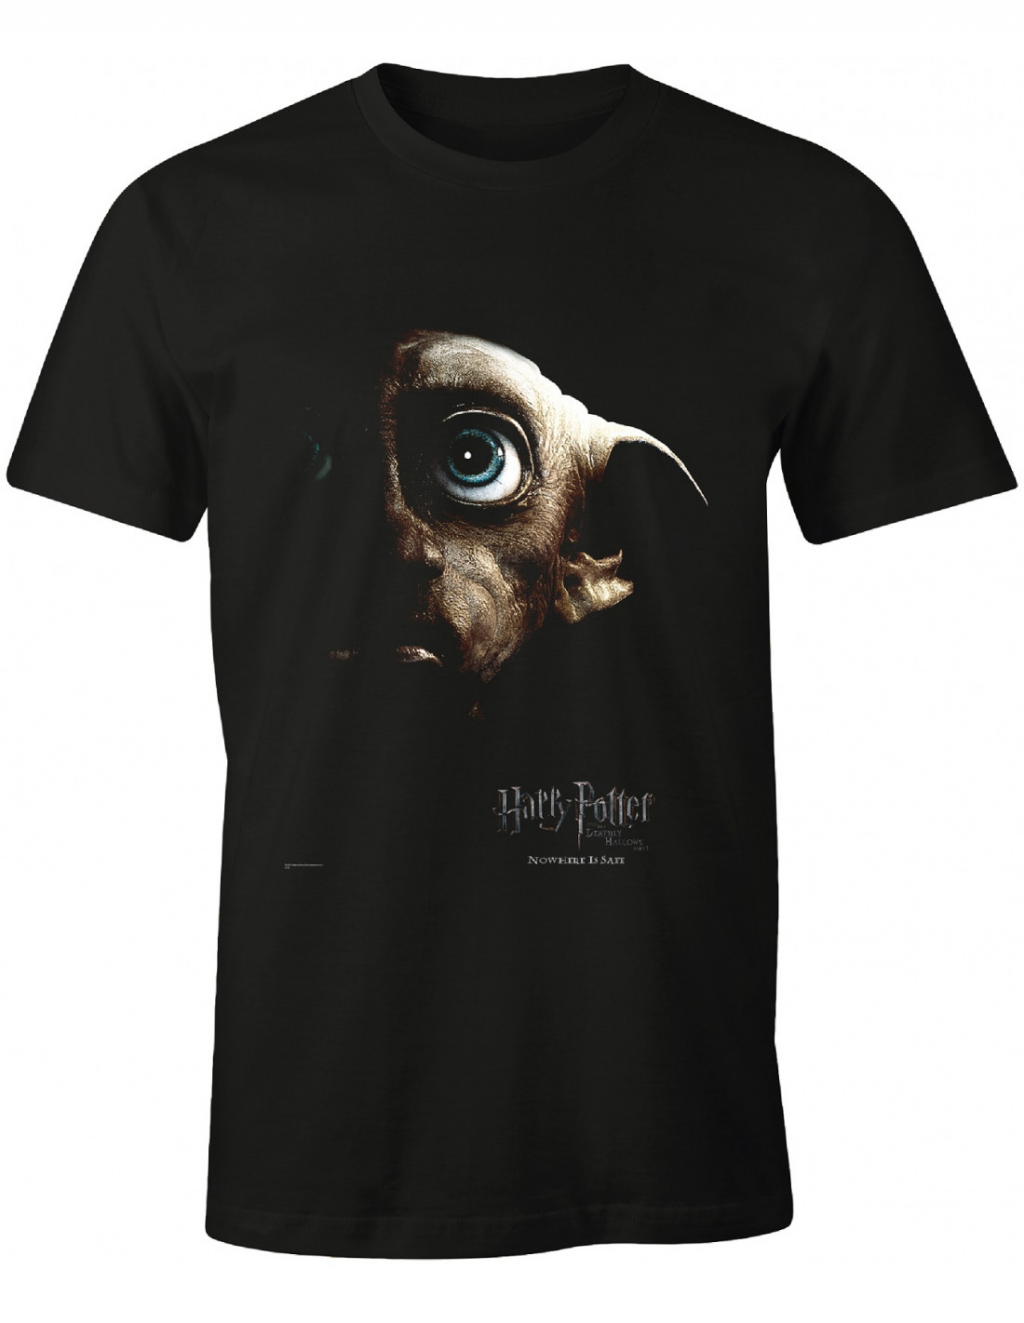 HARRY POTTER - Dobby - T-shirt homme (XL)